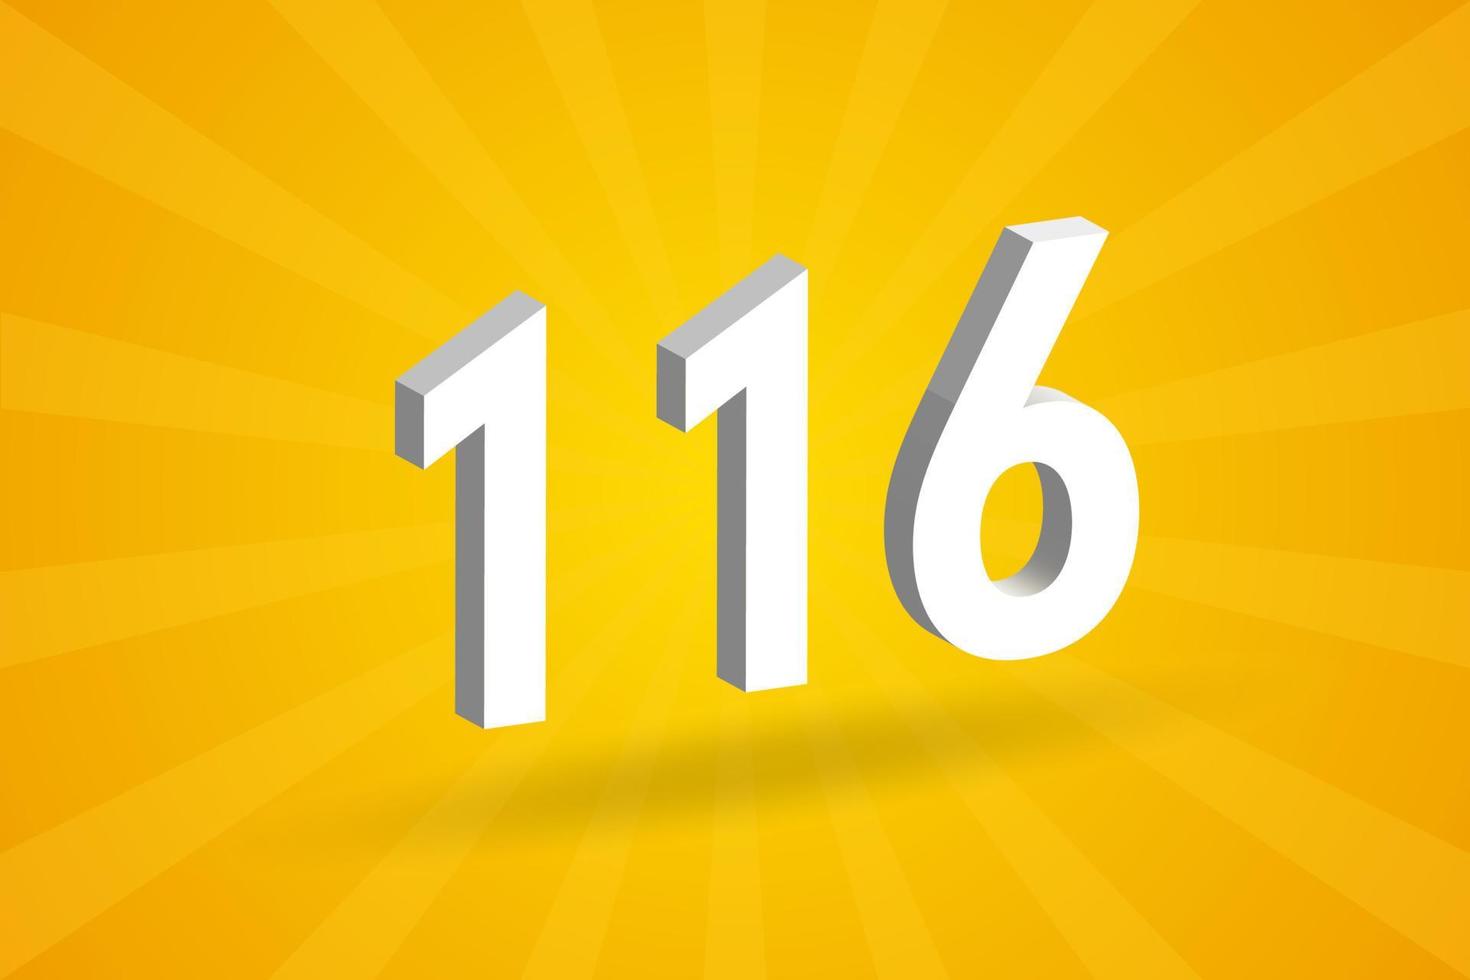 3d 116 siffra font alfabet. vit 3d siffra 116 med gul bakgrund vektor